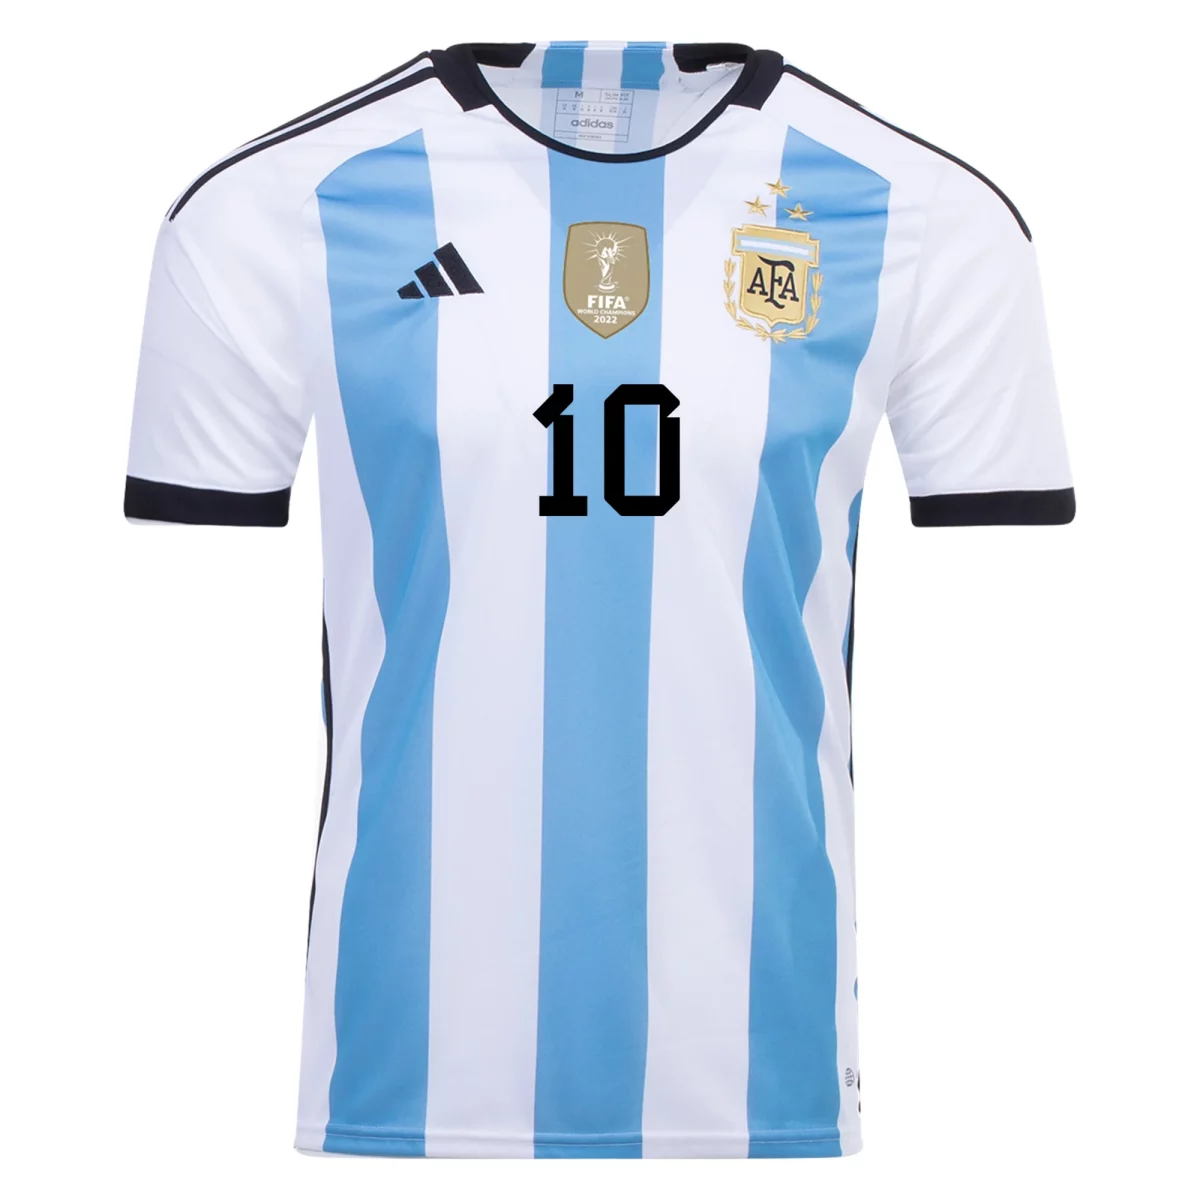 adidas messi argentina jersey